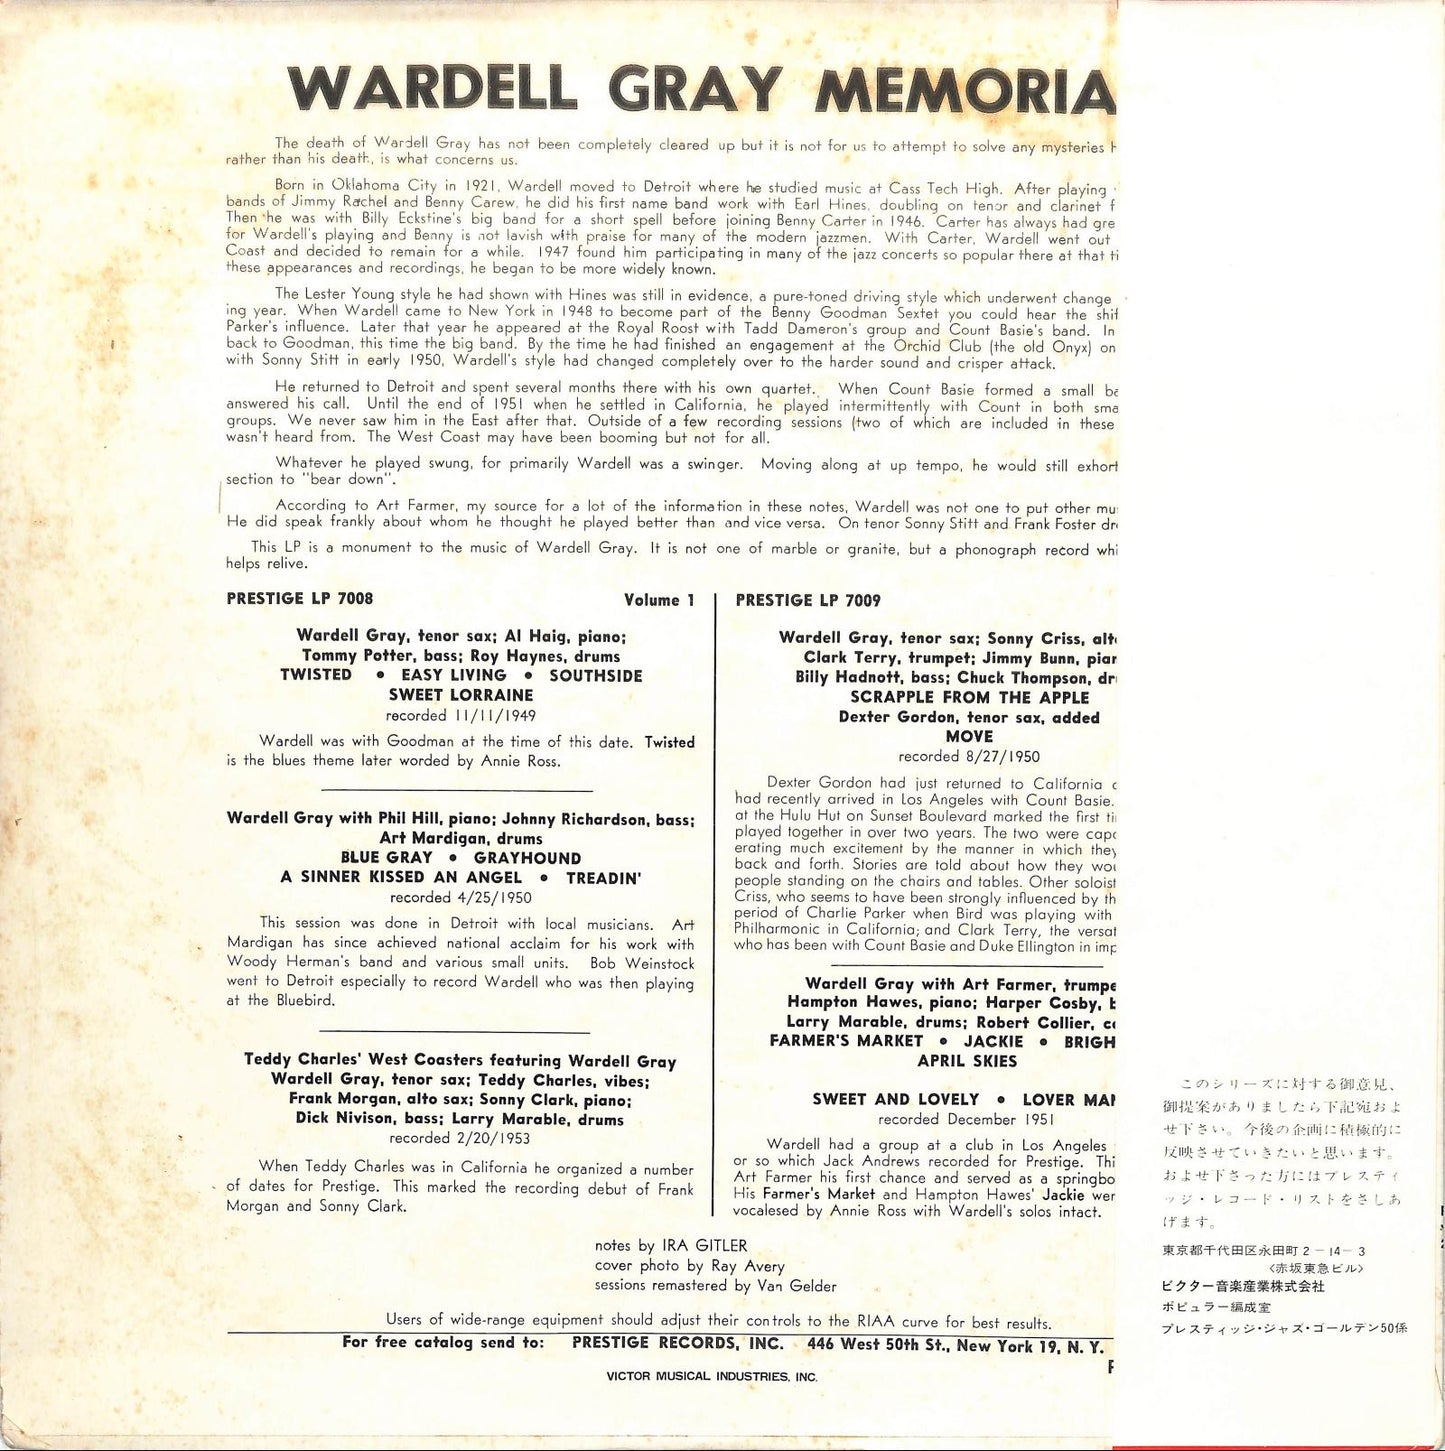 WARDELL GRAY - Memorial Volume One